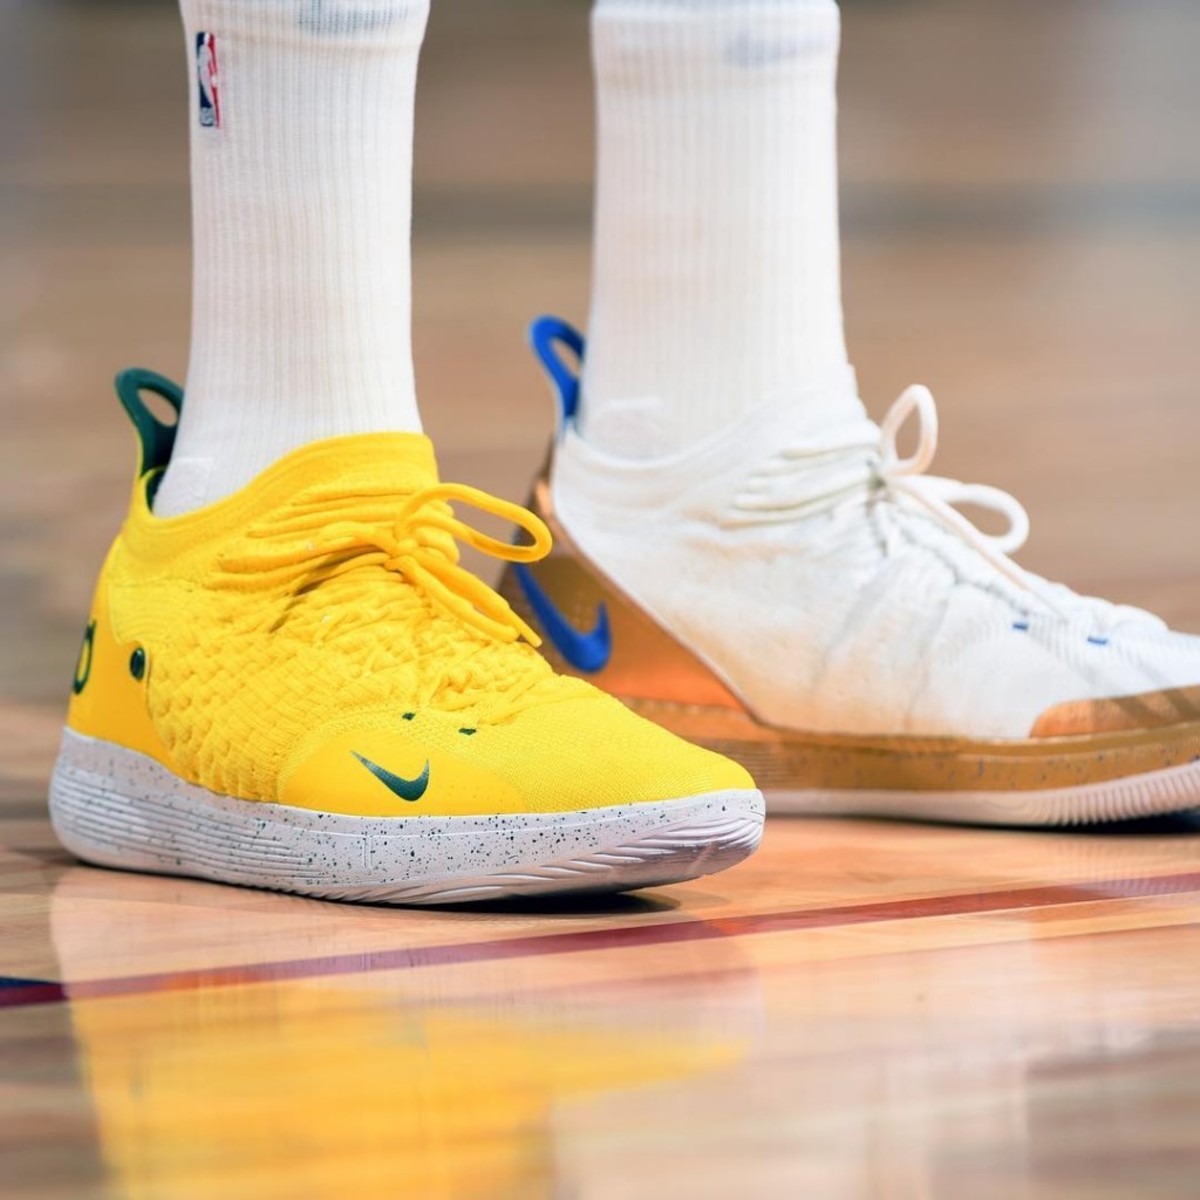 Top 10 Best Looking Basketball Shoes This Season – NBA News Rumors Trades Stats Free ...1024 x 1024